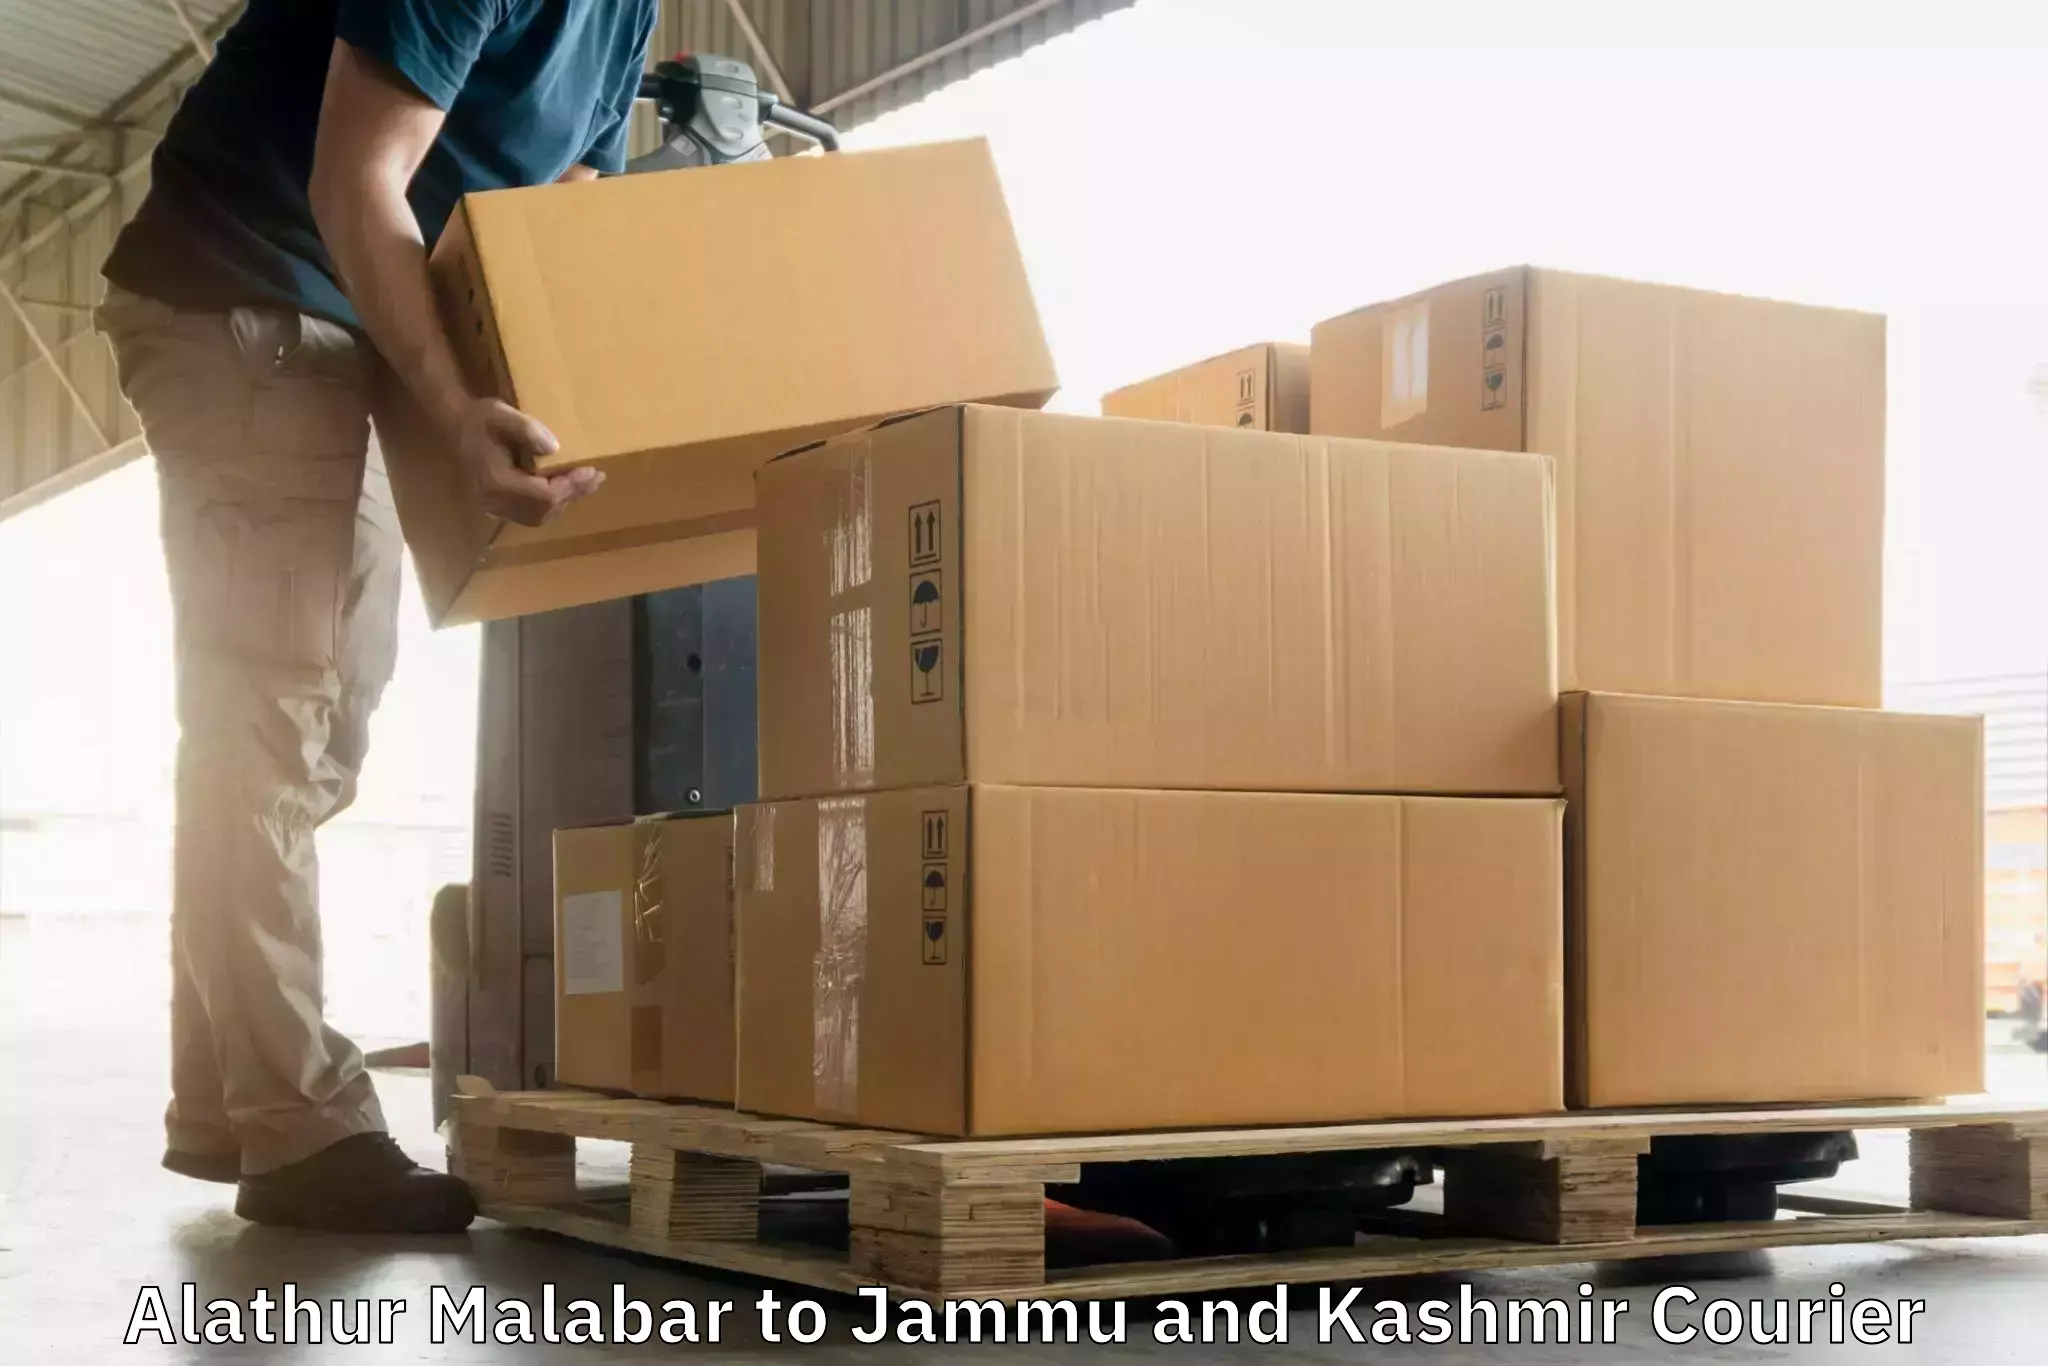 Speedy delivery service Alathur Malabar to Jammu and Kashmir